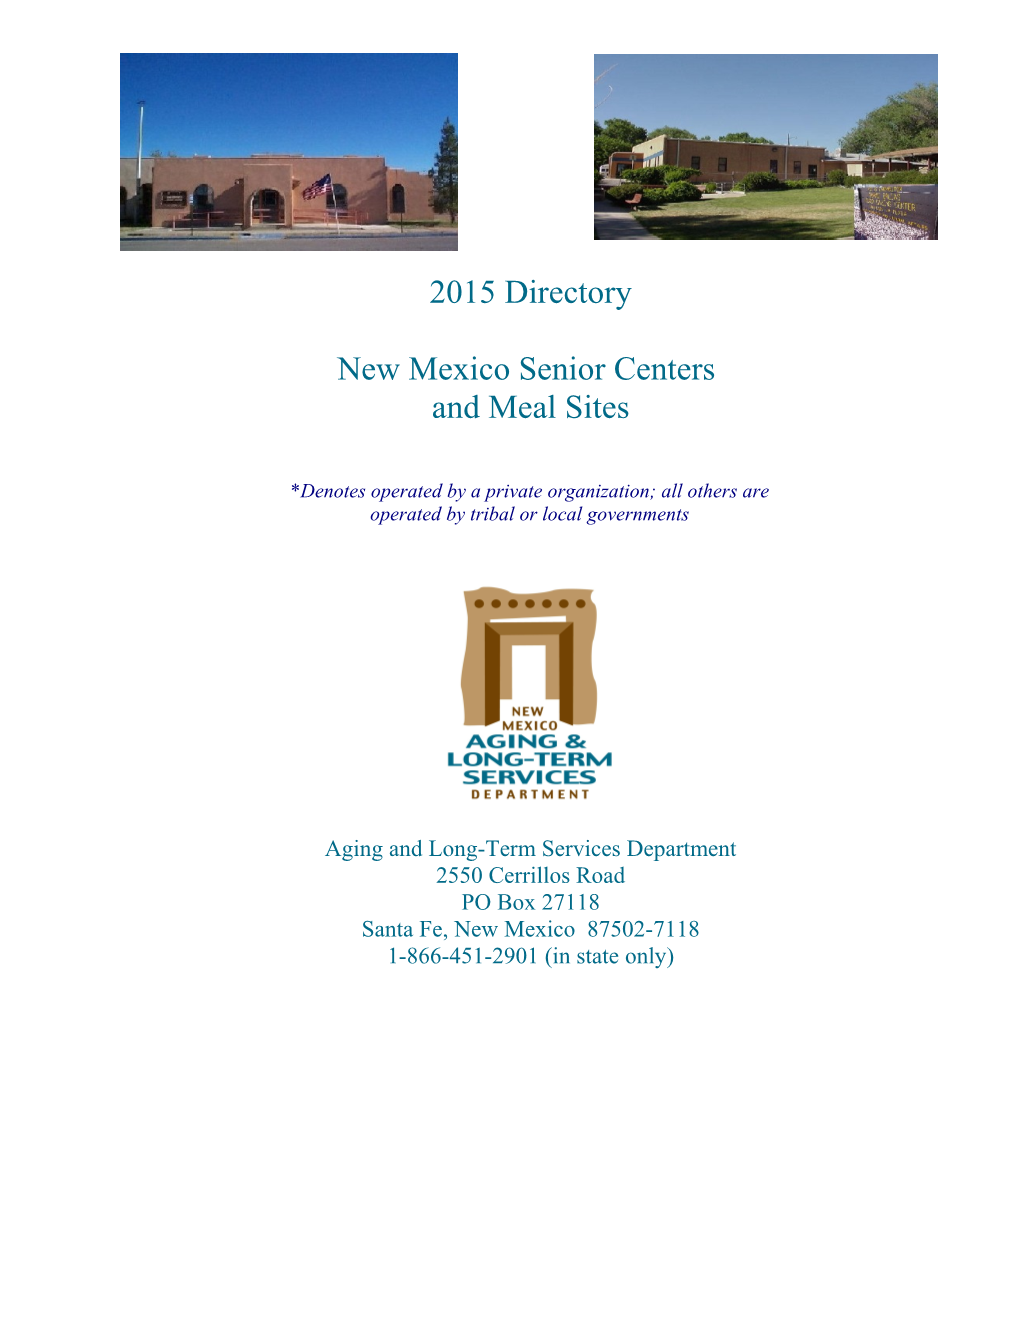 New Mexico Senior Centers